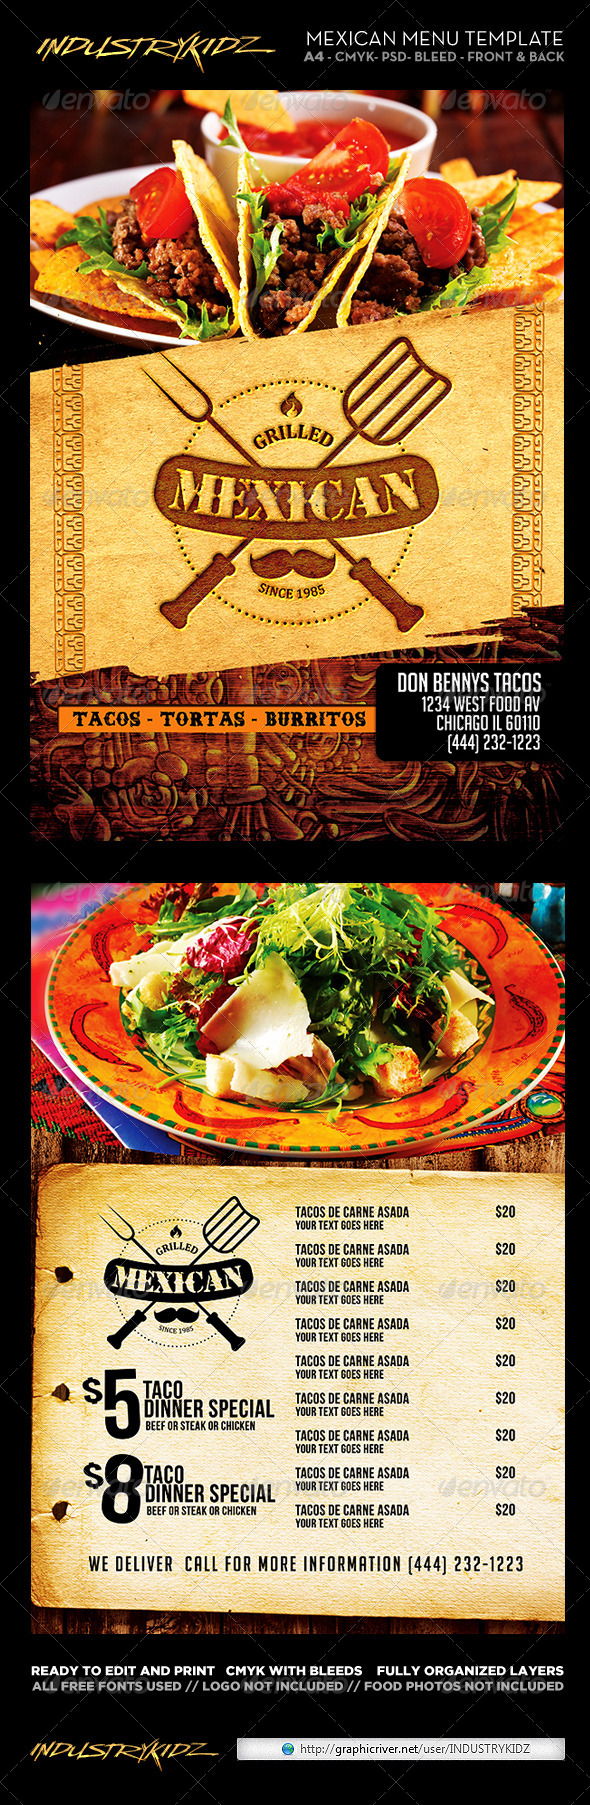 Mexican Restaurant Menu Template by INDUSTRYKIDZ GraphicRiver